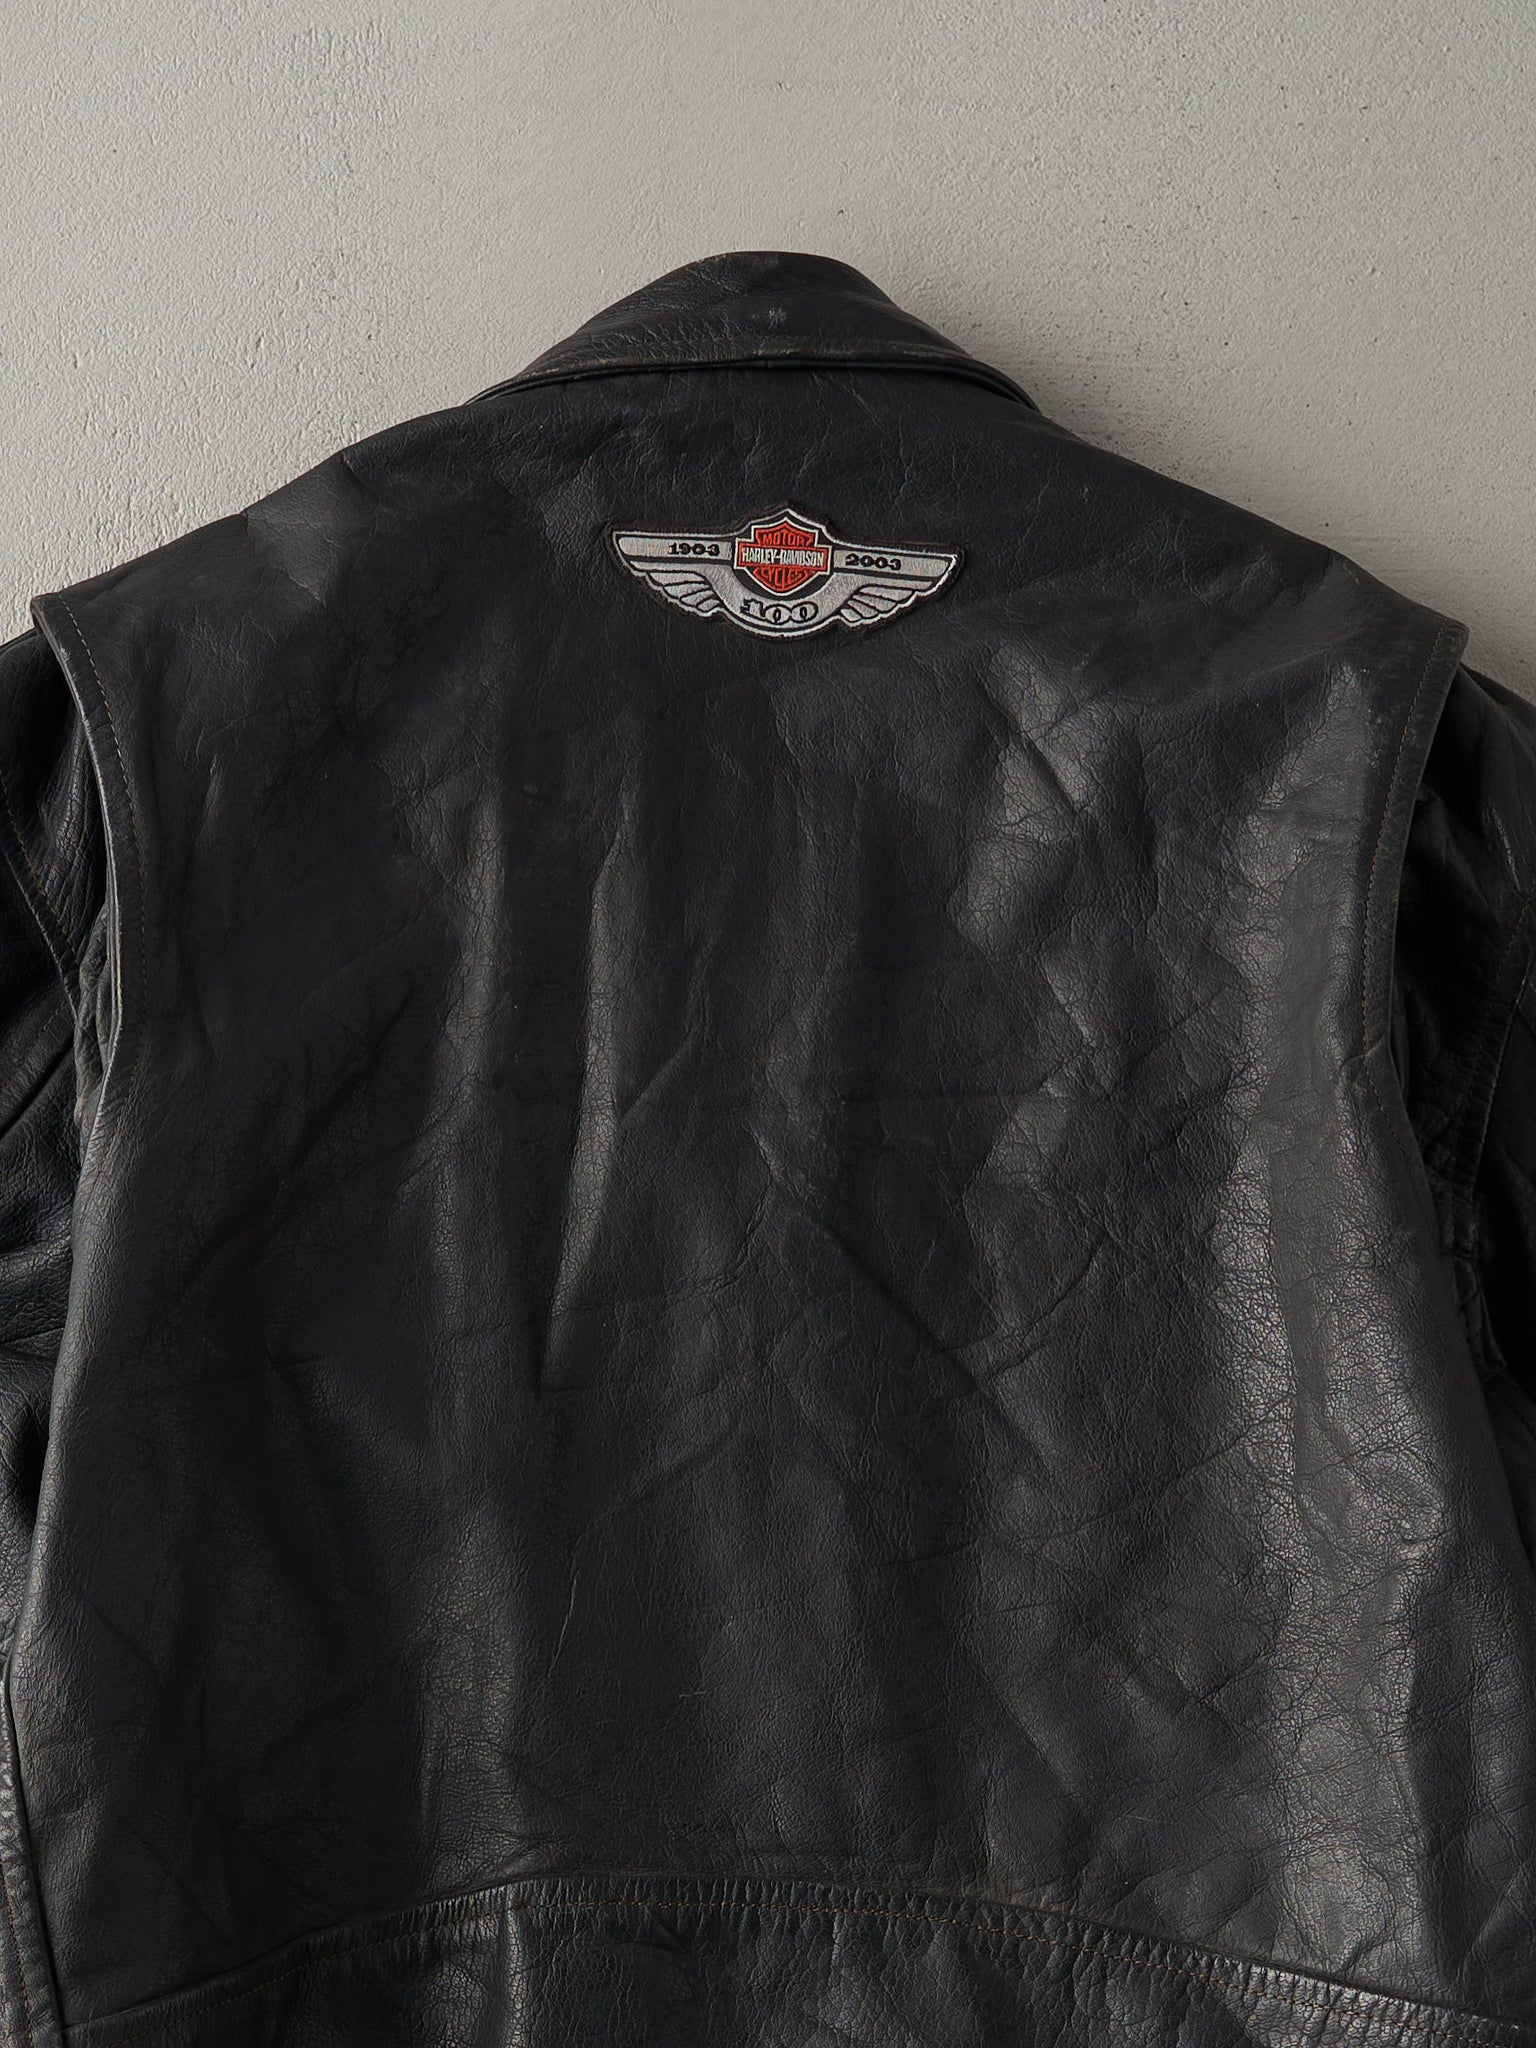 Vintage 90s Black Harley Owners Group Road Gear Leather Biker Jacket (L)